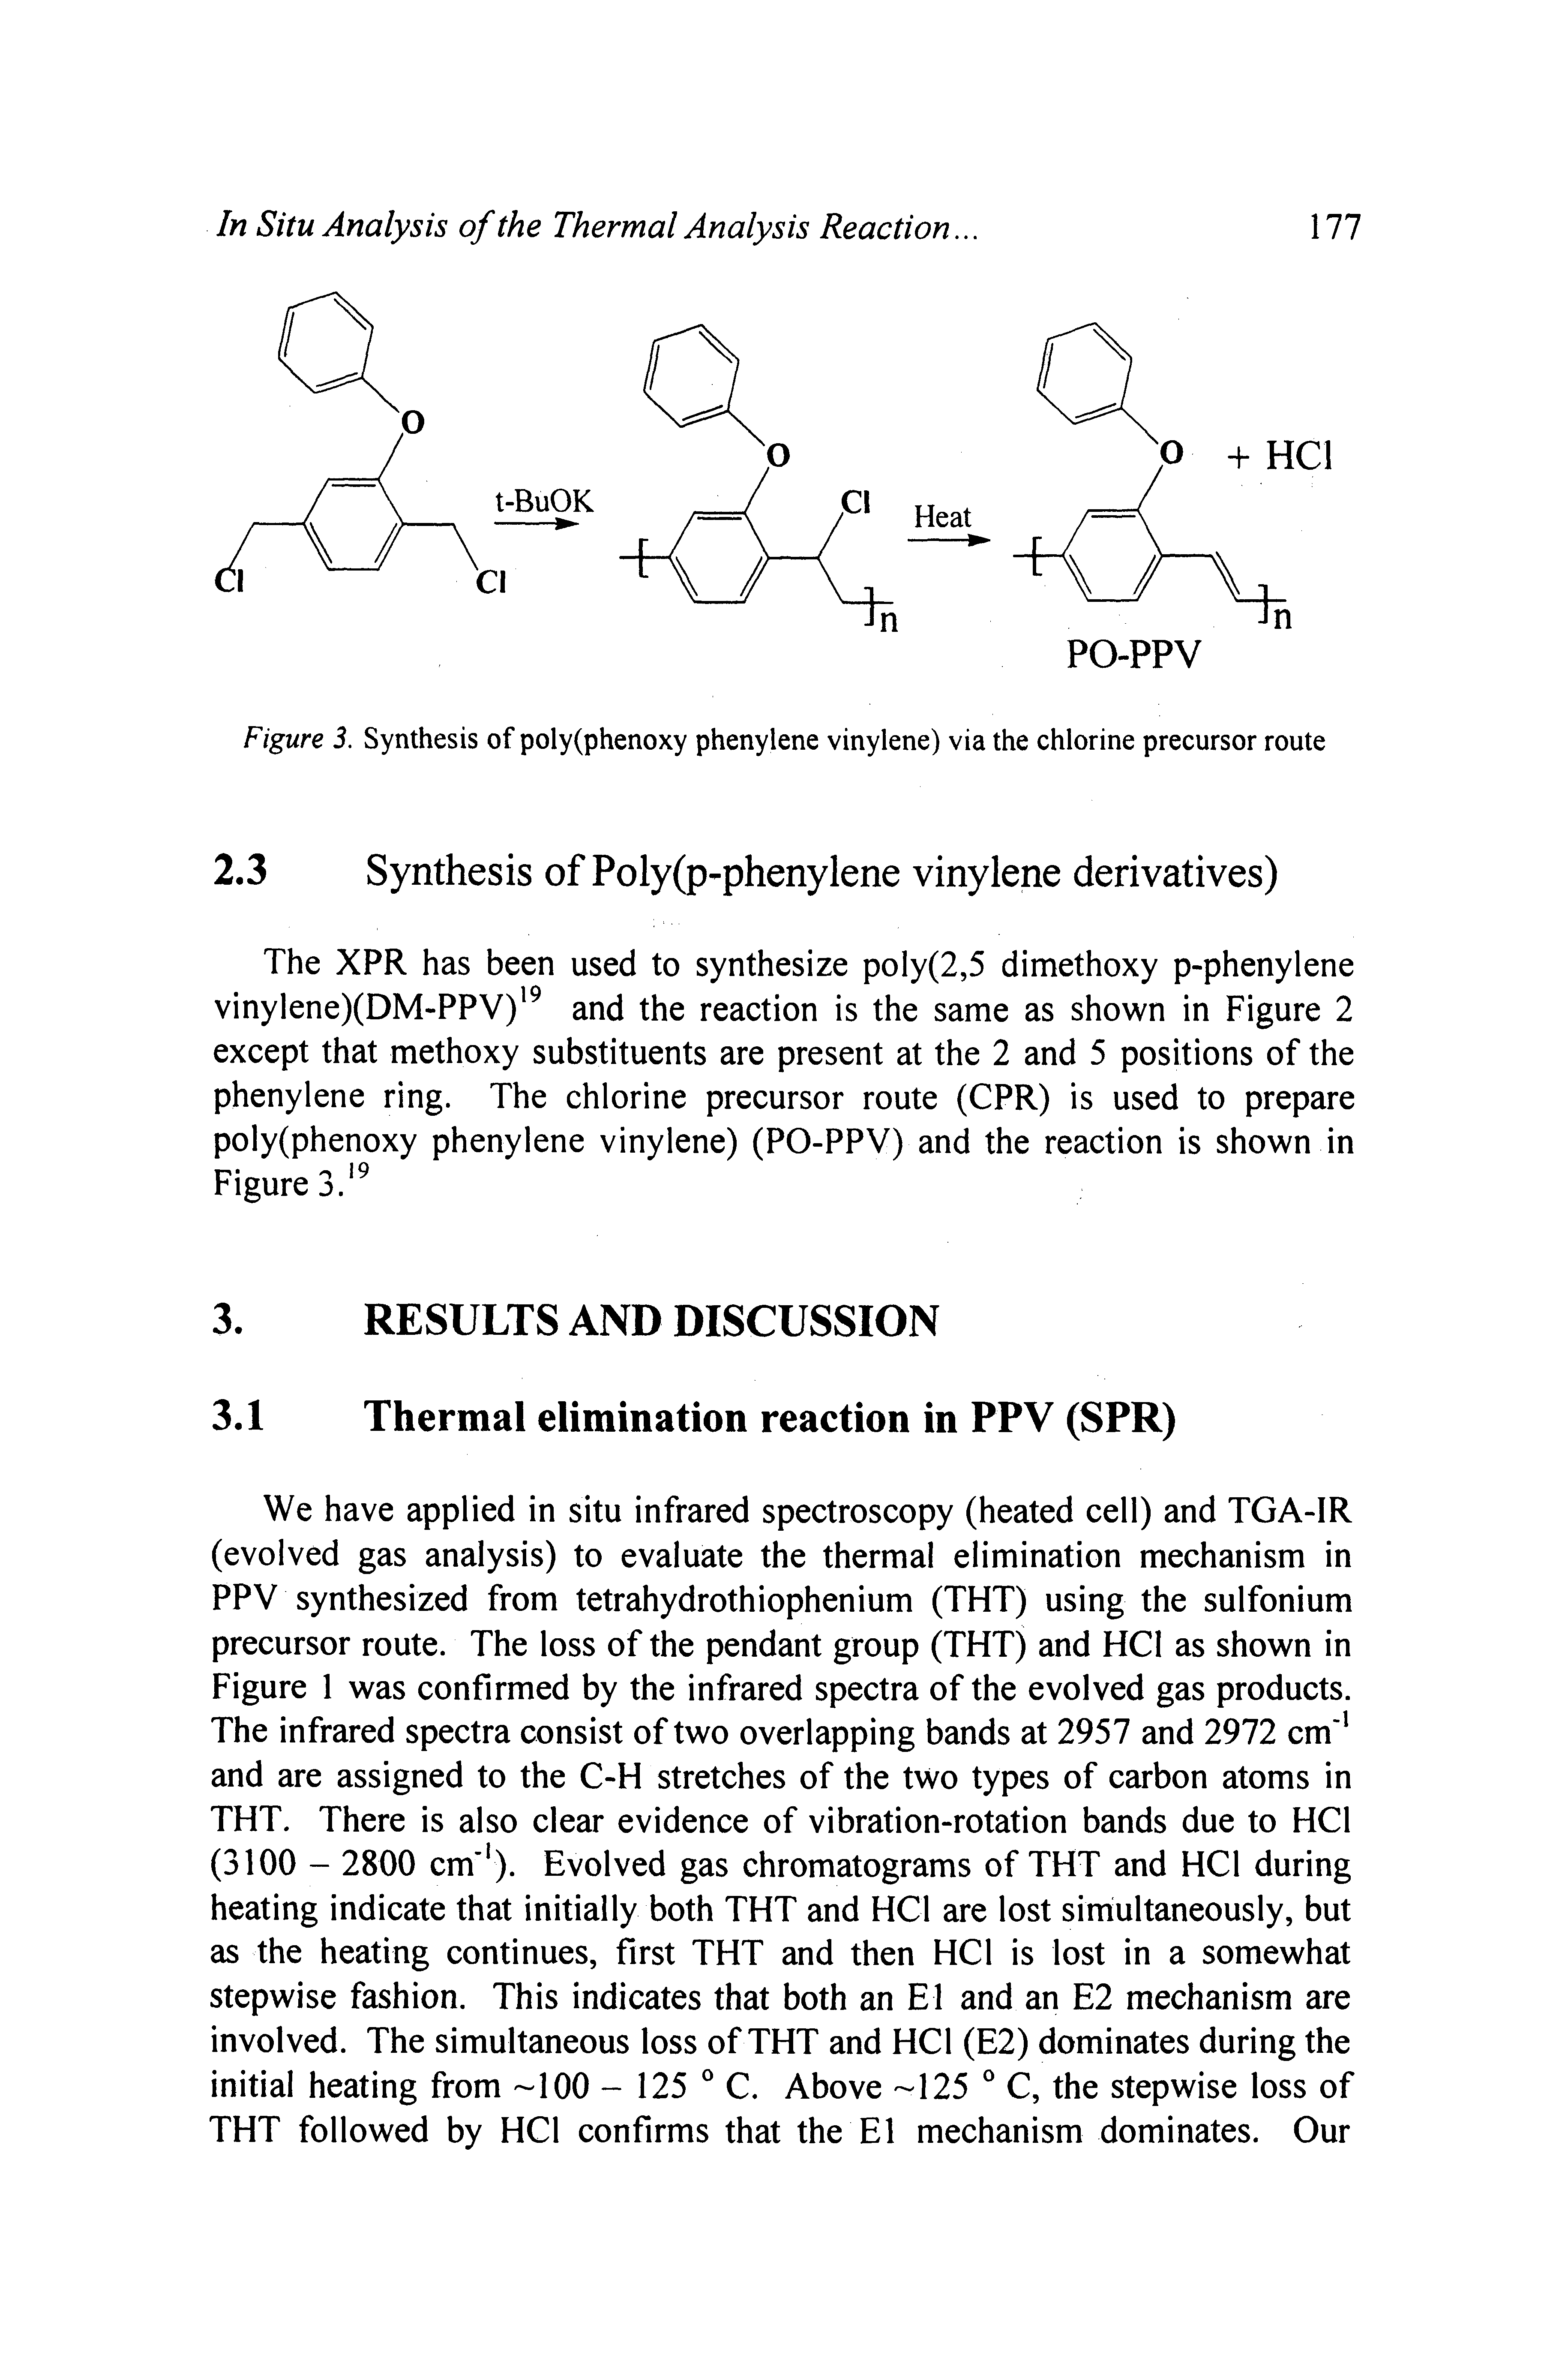 Figure 3. Synthesis of poly(phenoxy phenylene vinylene) via the chlorine precursor route...